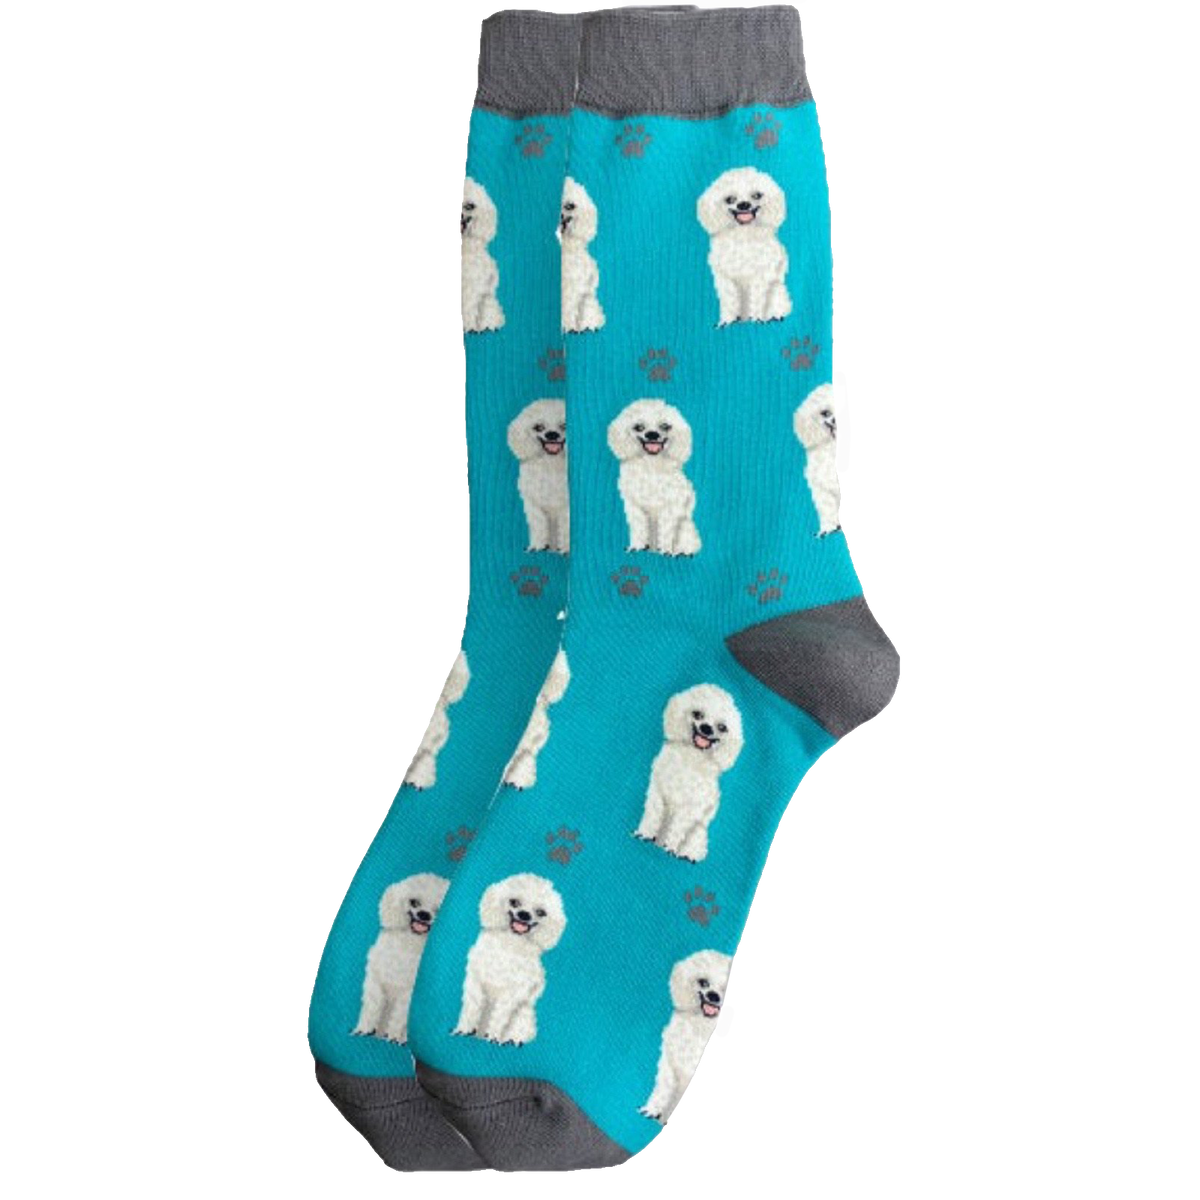 White Poodle Dog Socks